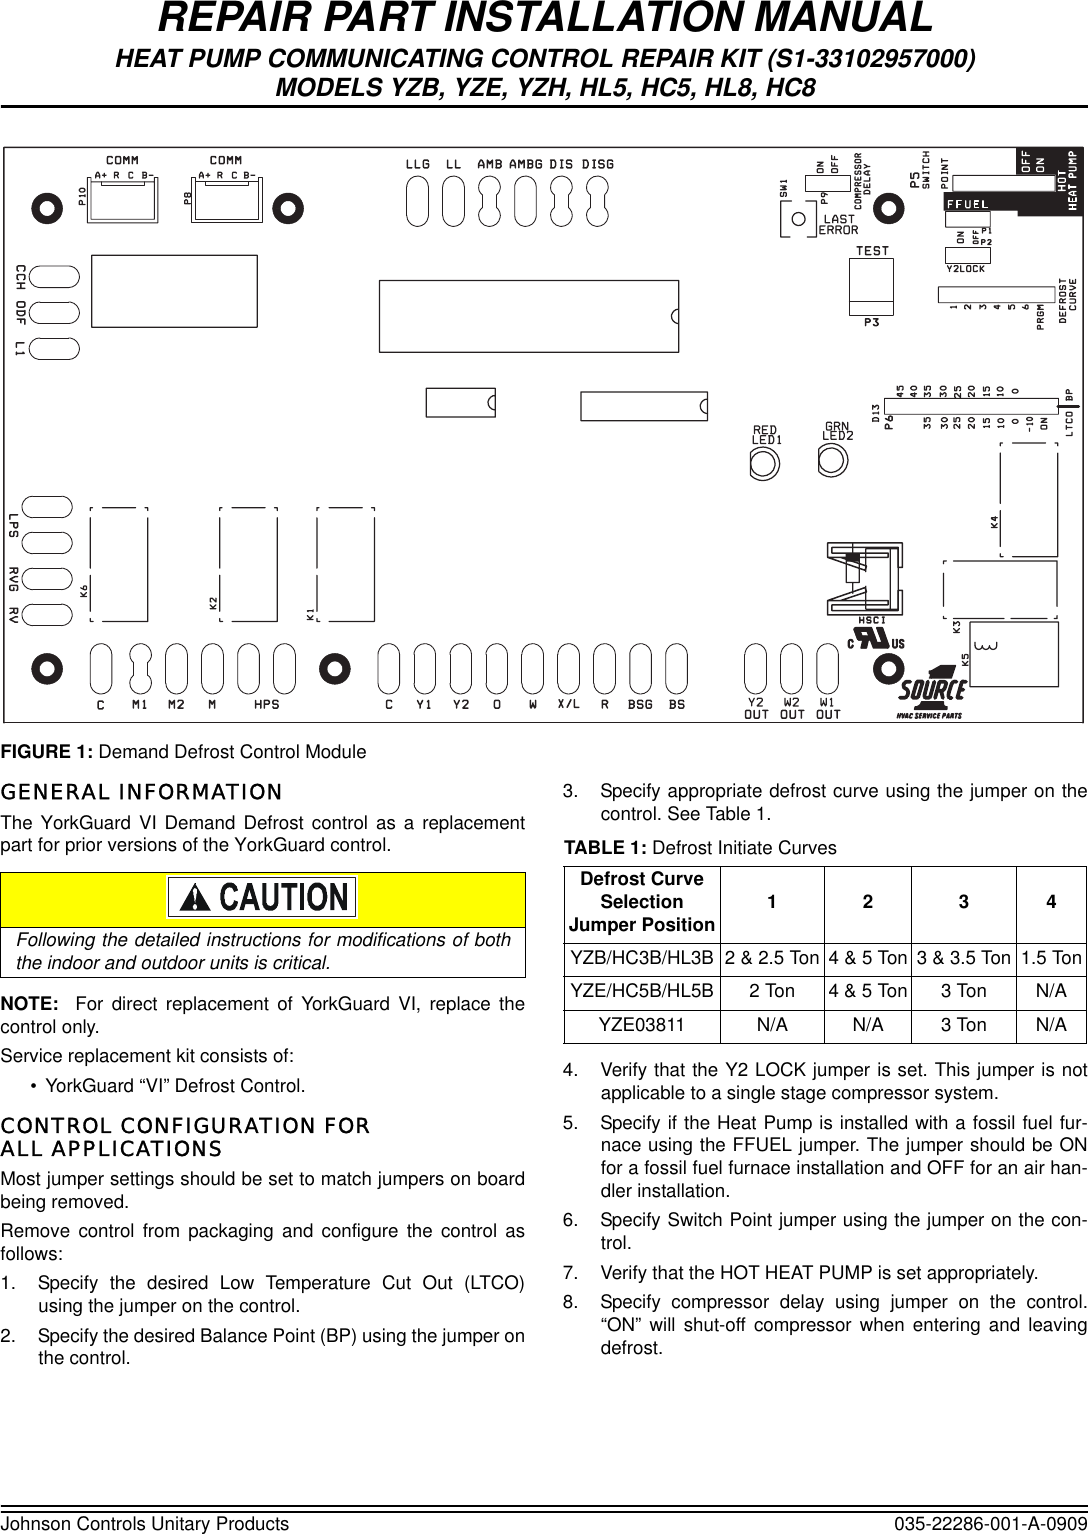 Page 1 of 2 - Johnson-Controls Johnson-Controls-Johnson-Controls-Inc-Heat-Pump-Hc8-Users-Manual- 035-22286-001-A-0909  Johnson-controls-johnson-controls-inc-heat-pump-hc8-users-manual